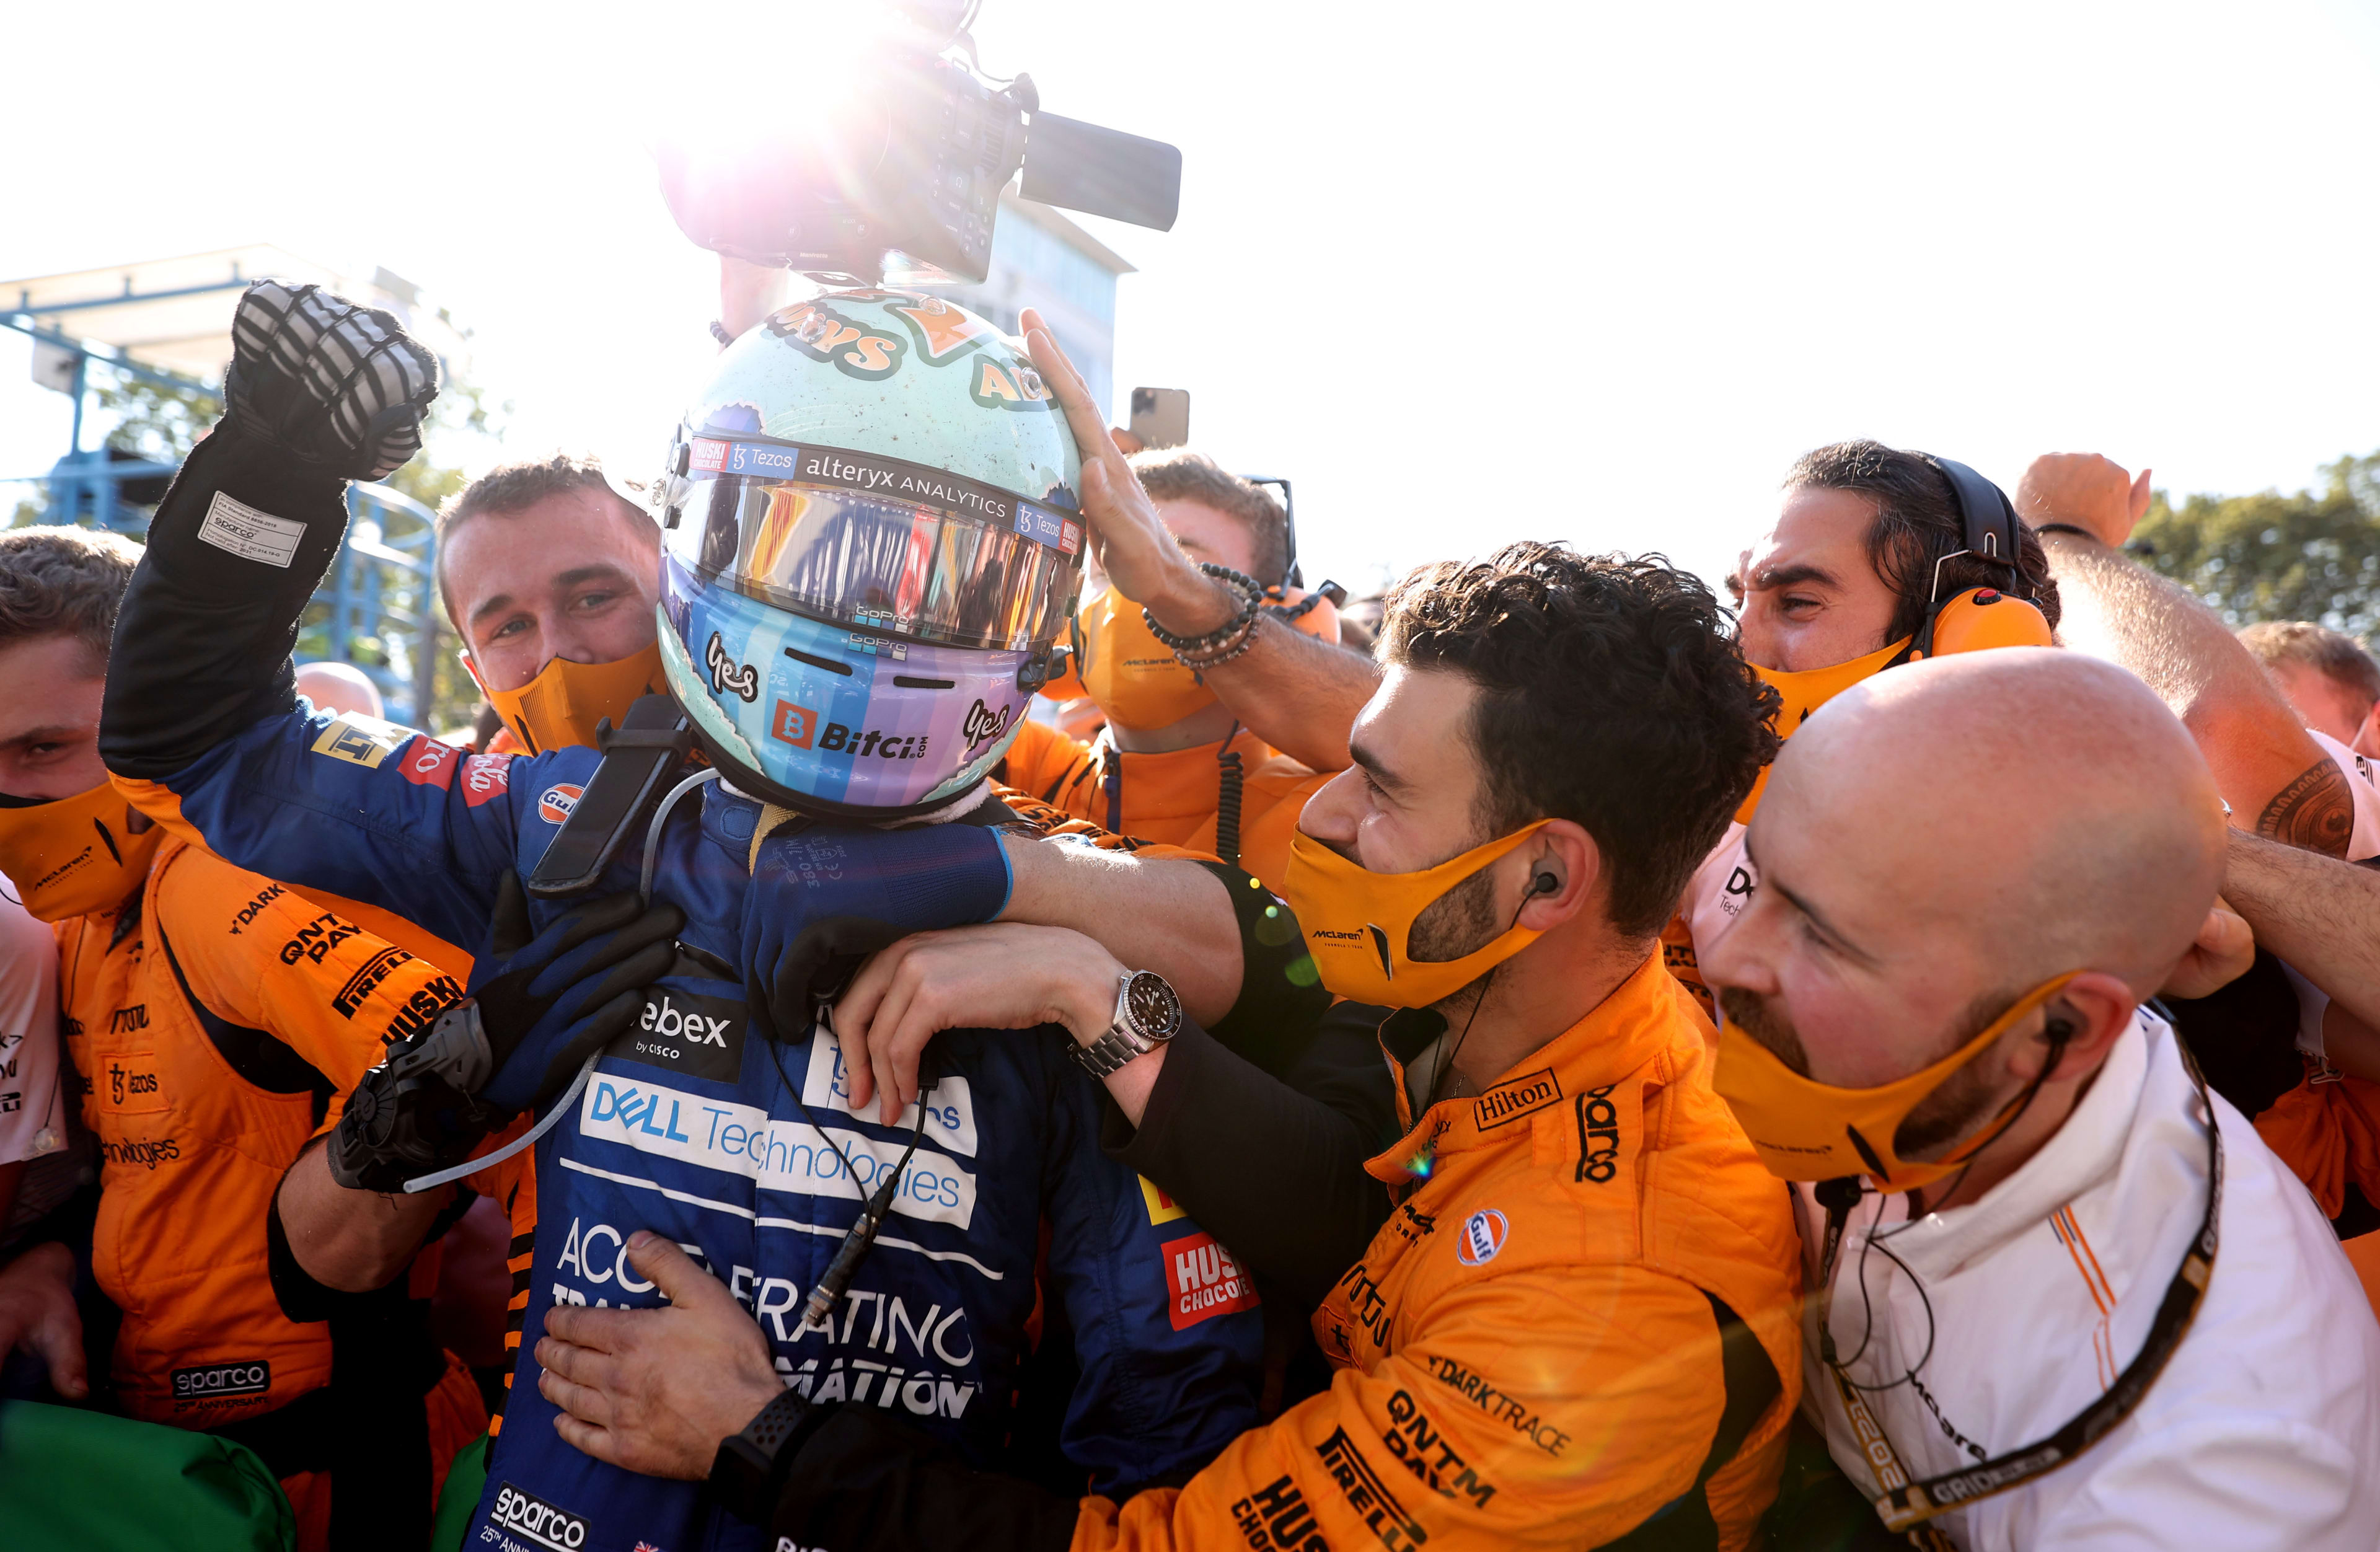 Ricciardo: Surreal having Monza F1 trophy next to Senna's